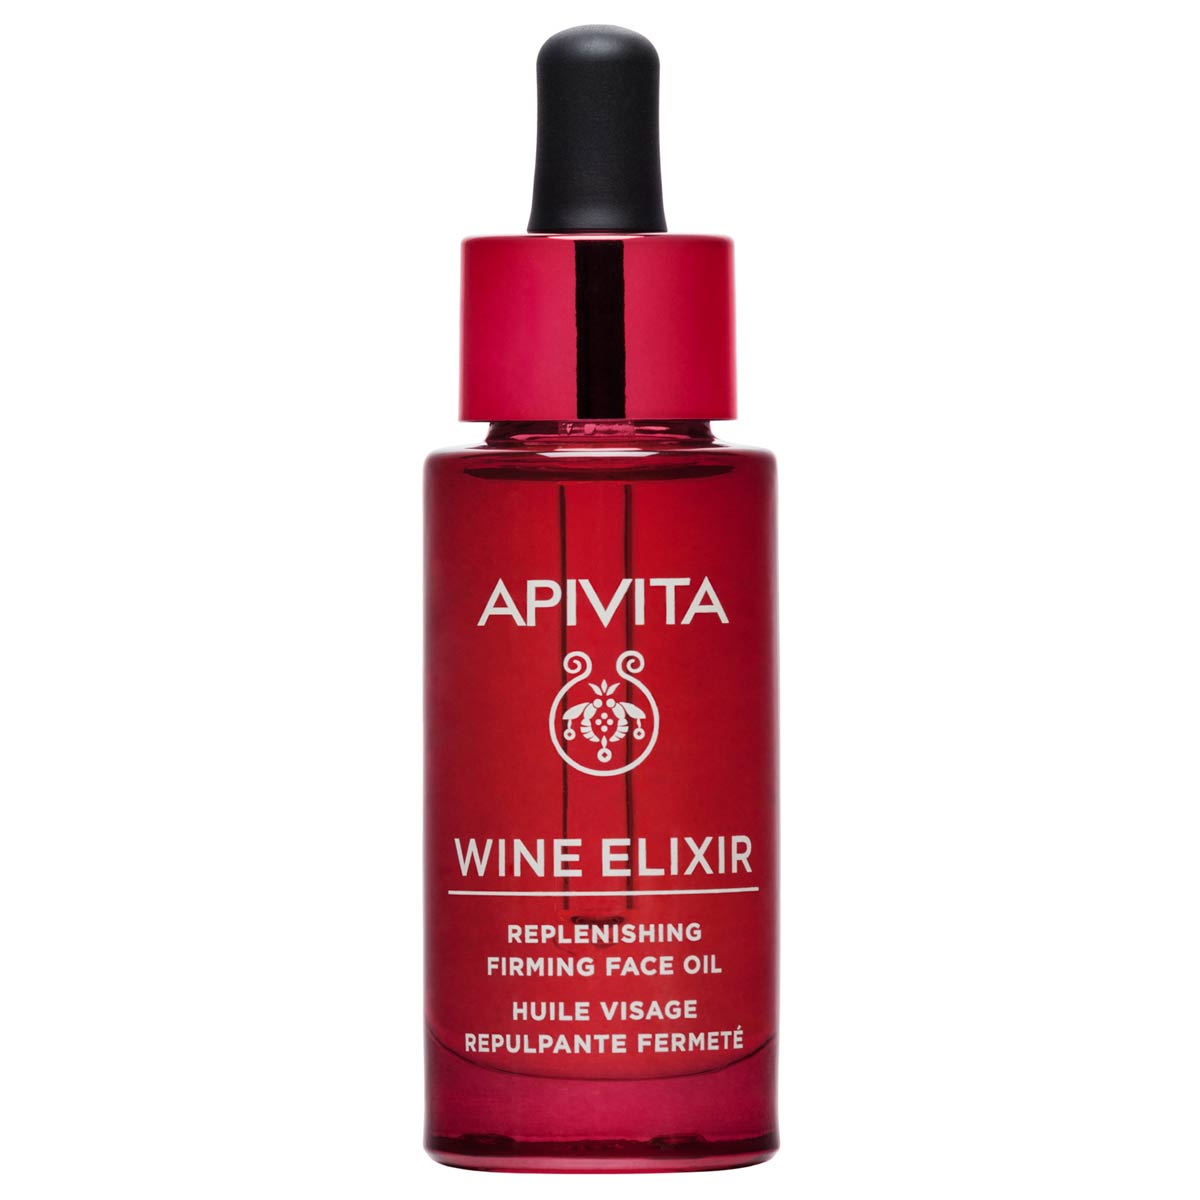 APIVITA WINE ELIXIR Replenishing Firming Face Oil 30ml